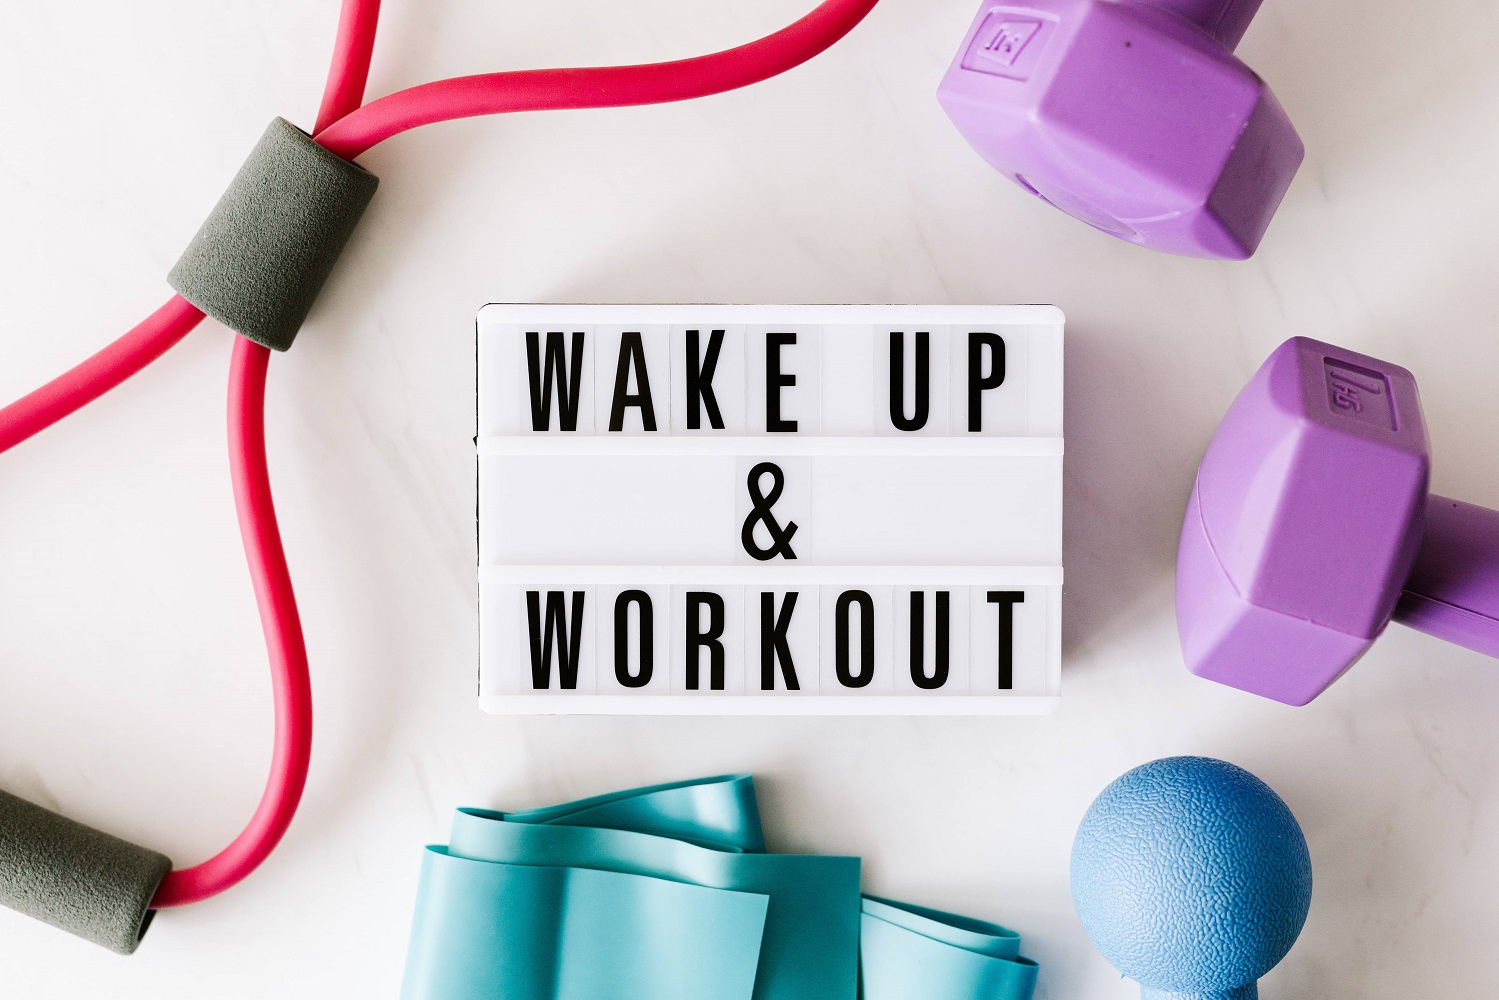 Wake up & Workout sign